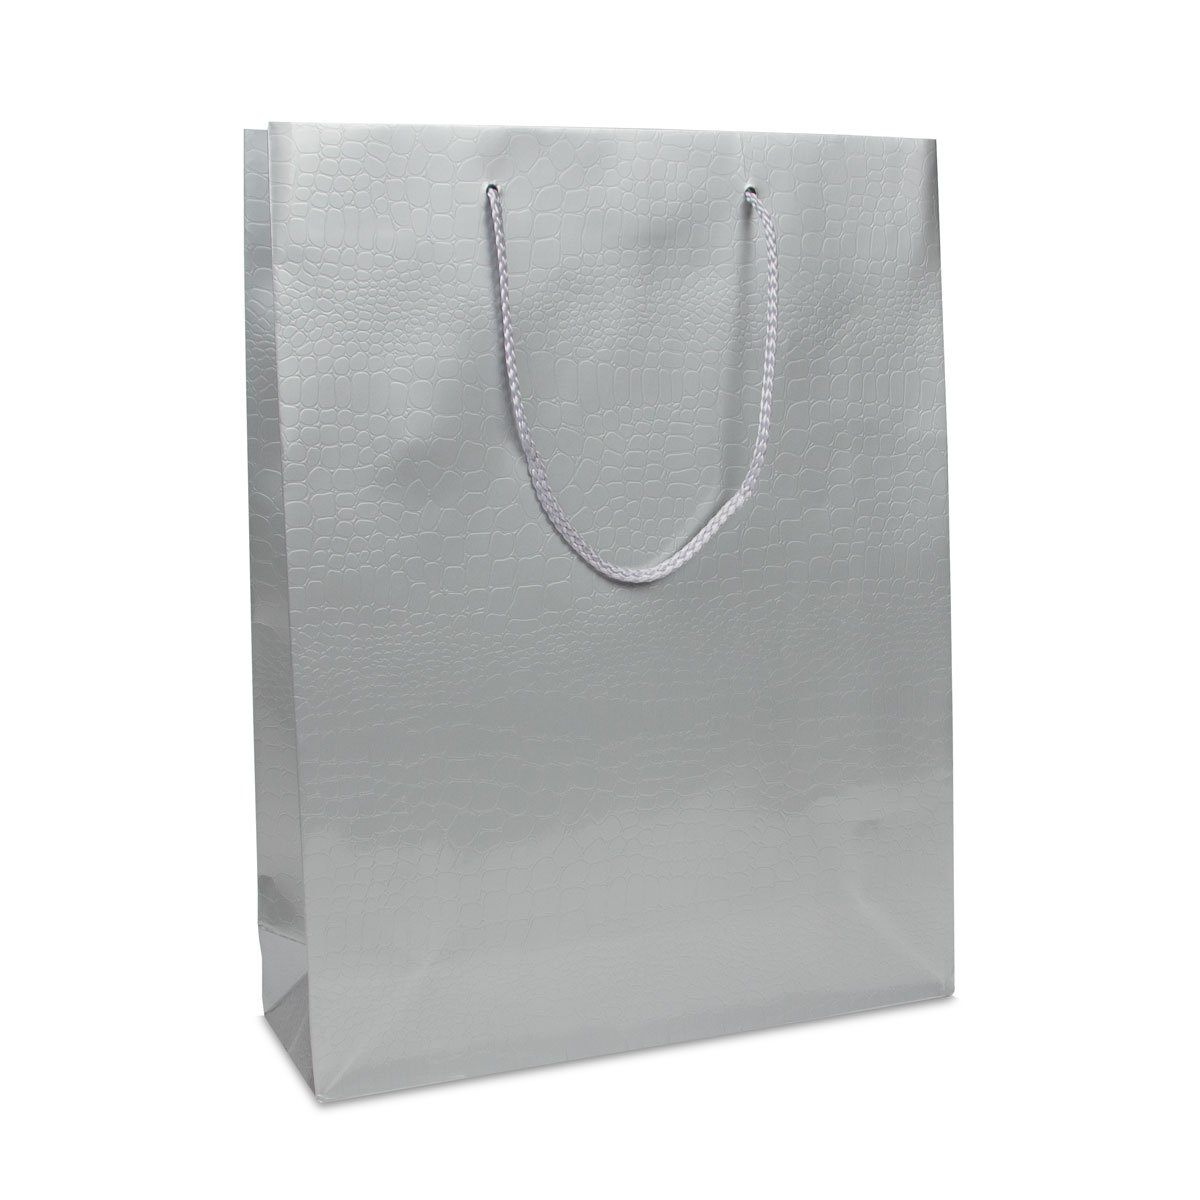 Luxury paper bags - Croco motive